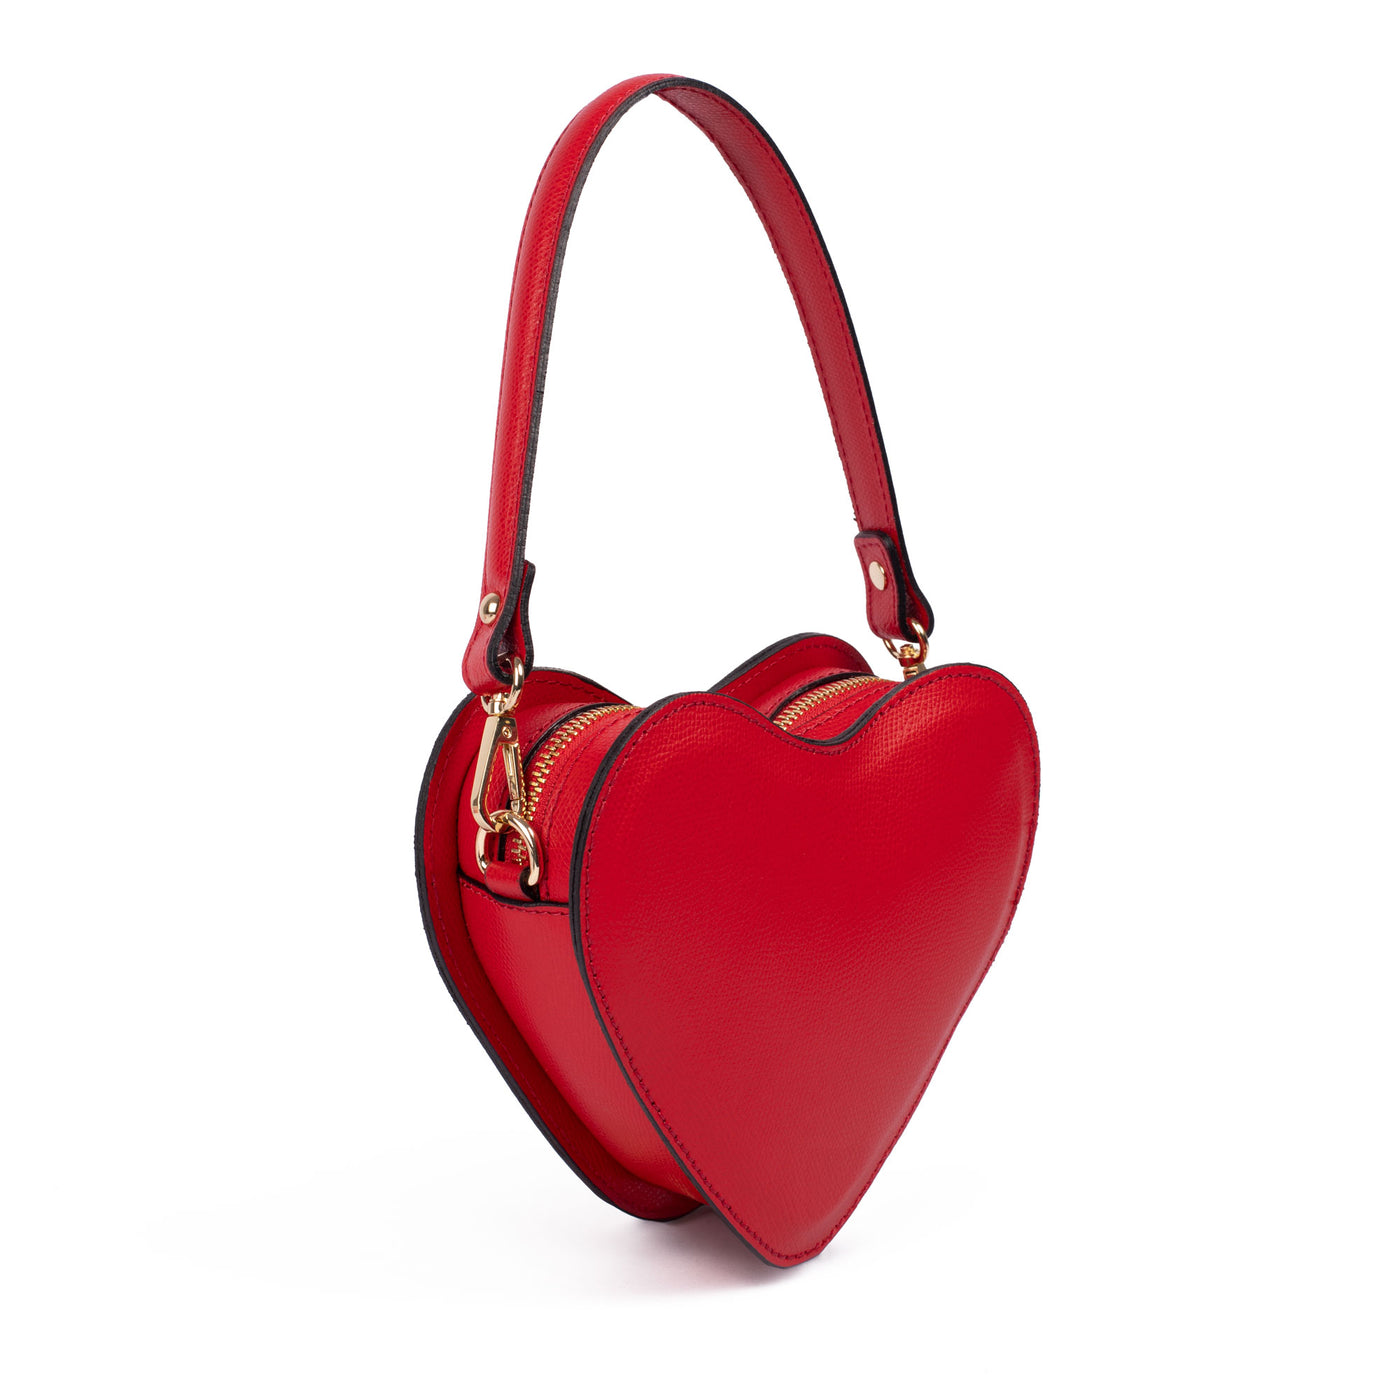 The Mini Viola Heart Bag